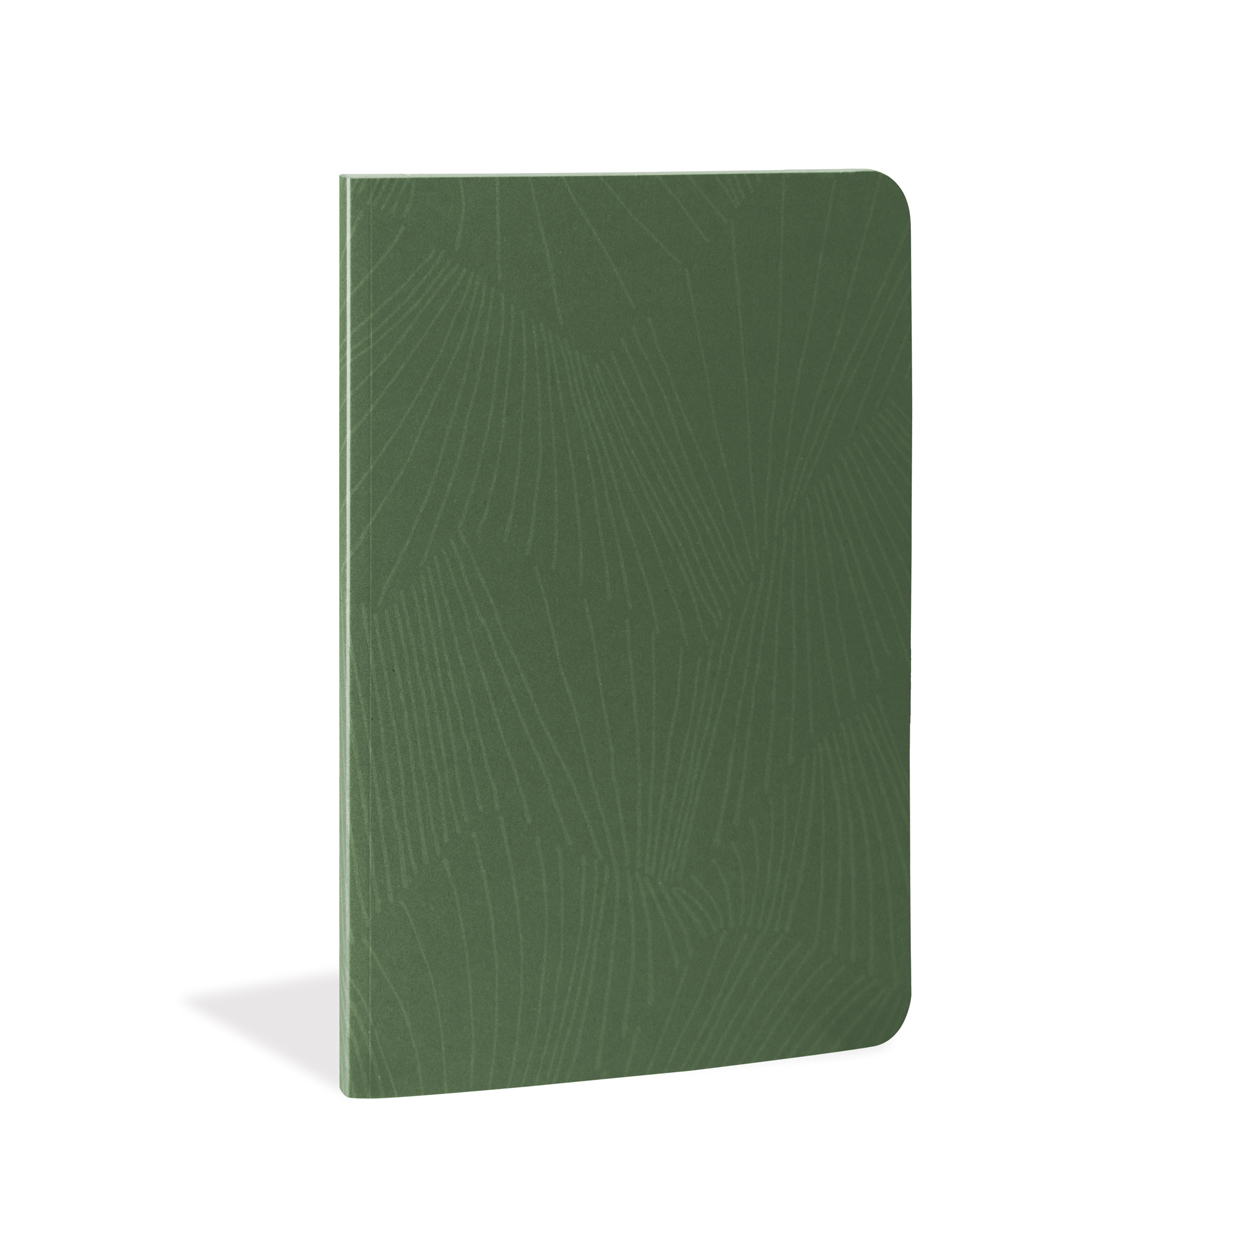 Pine | plant paper